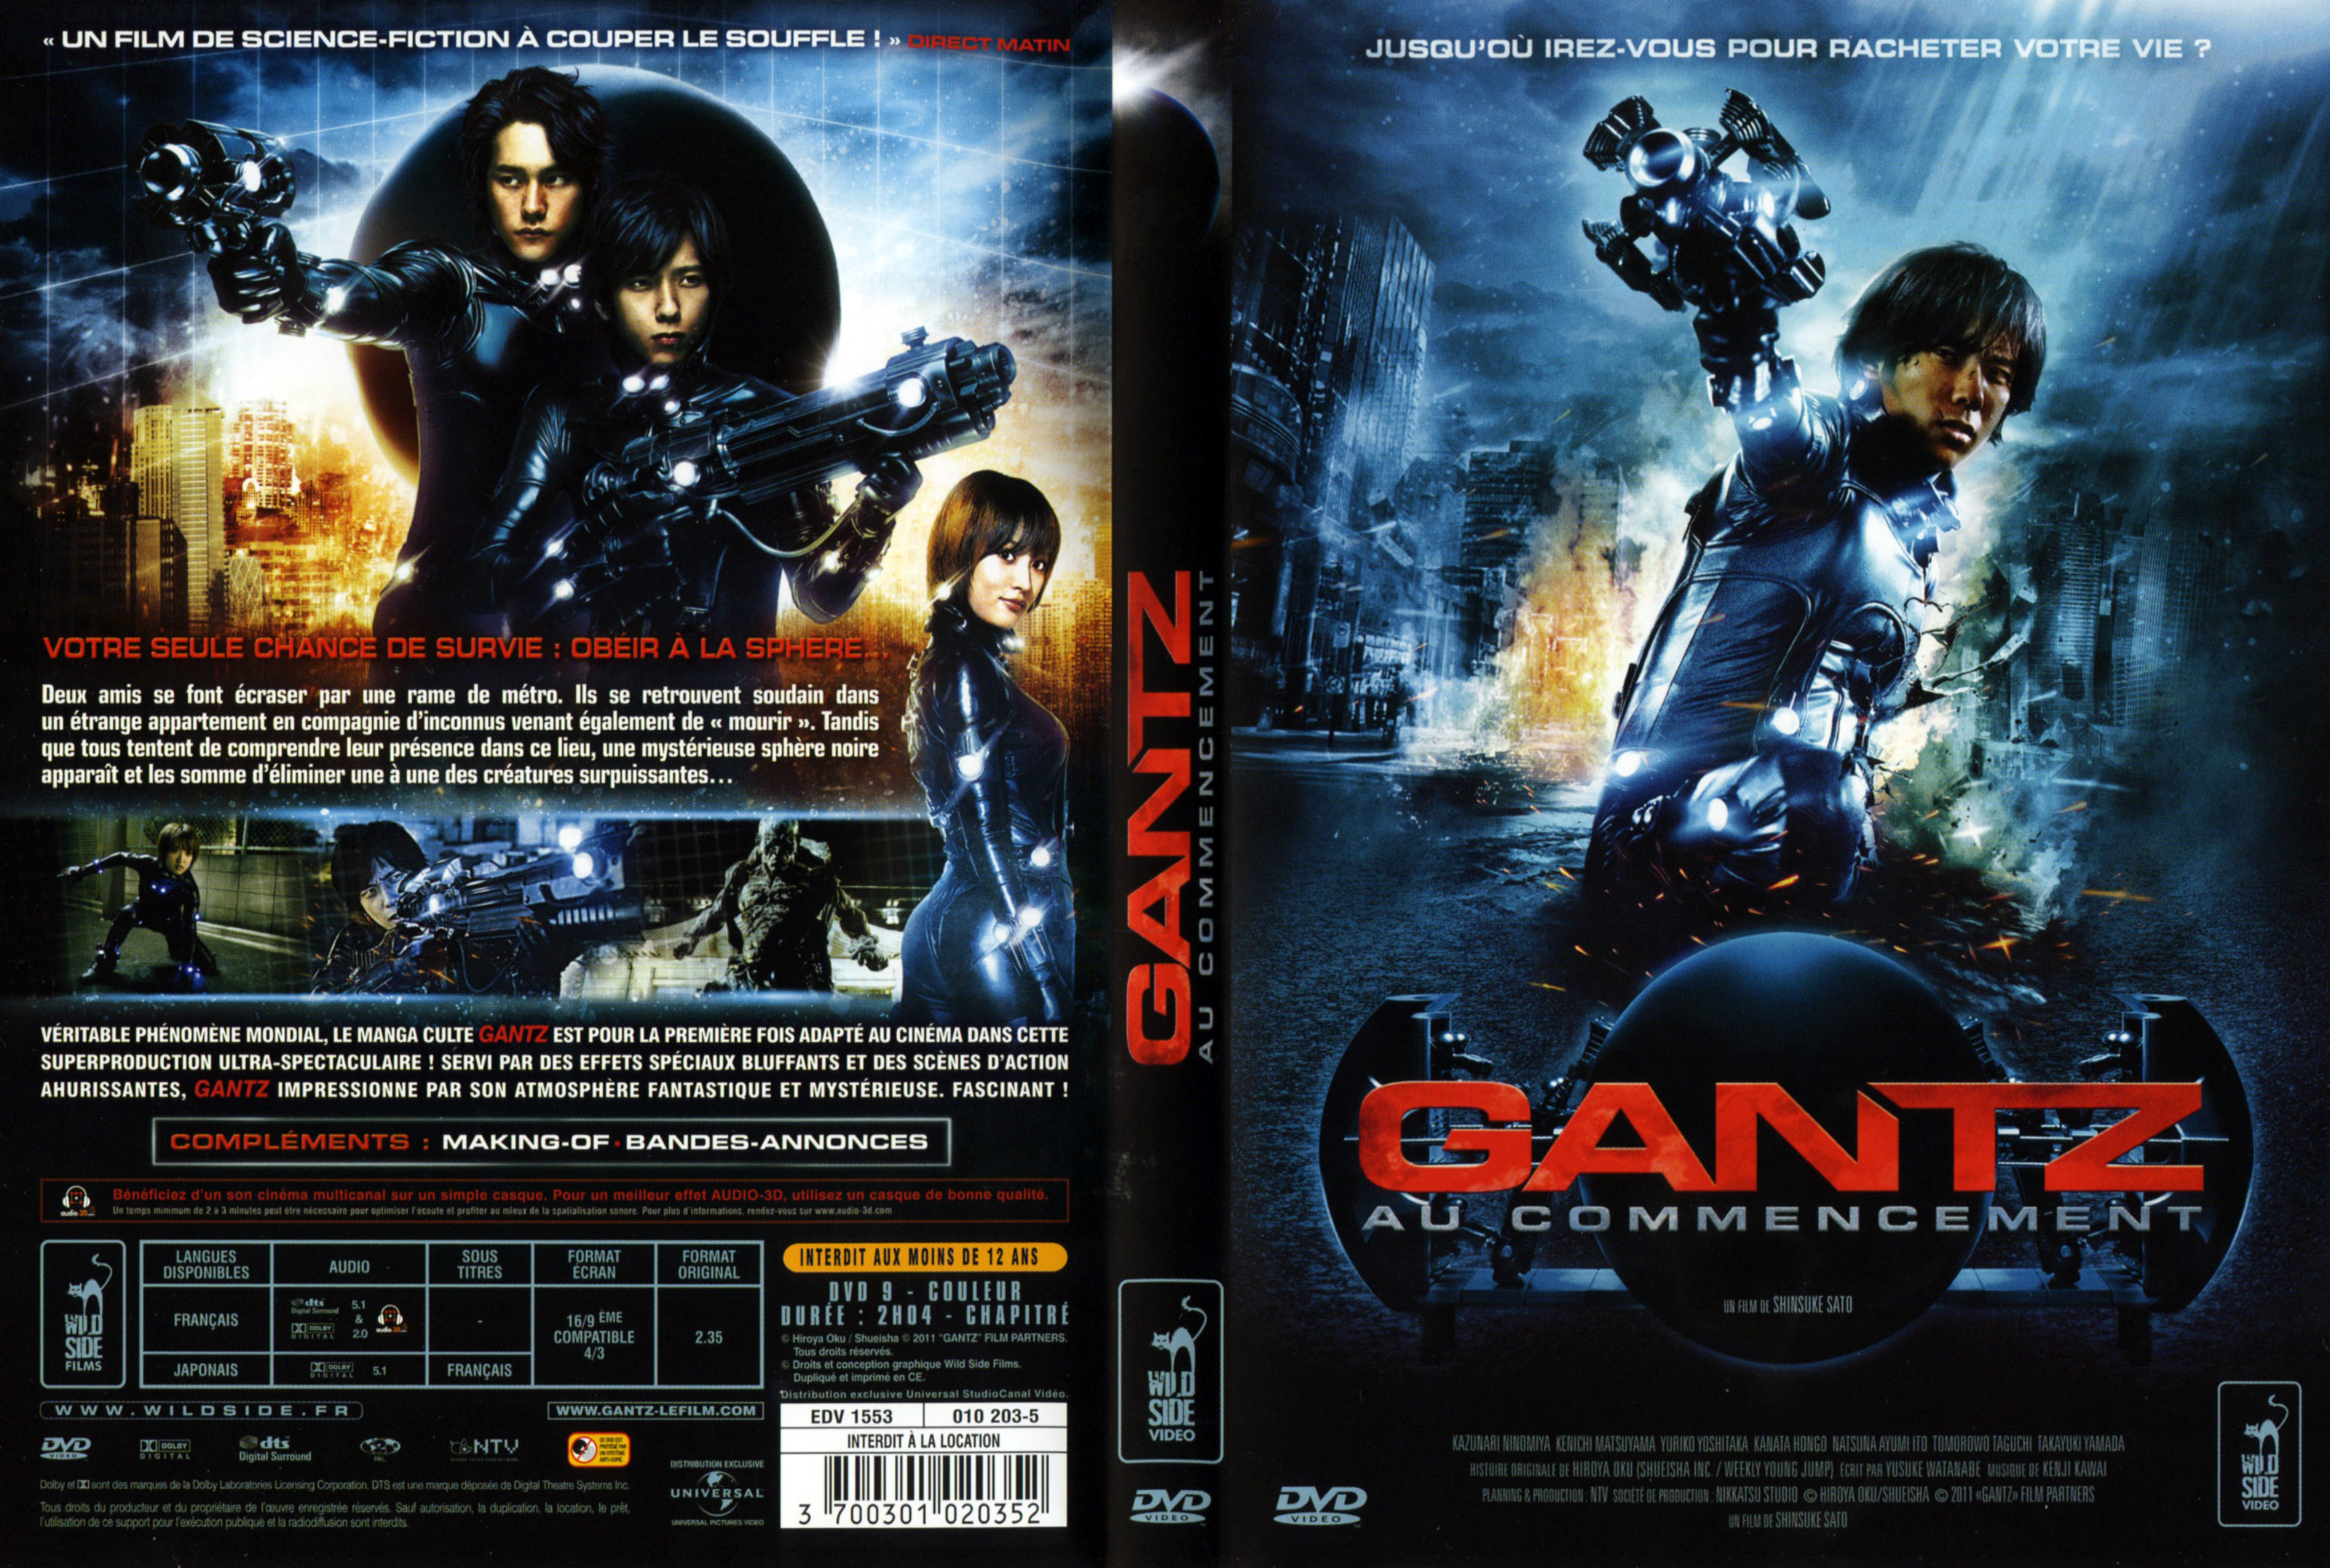 Jaquette DVD Gantz